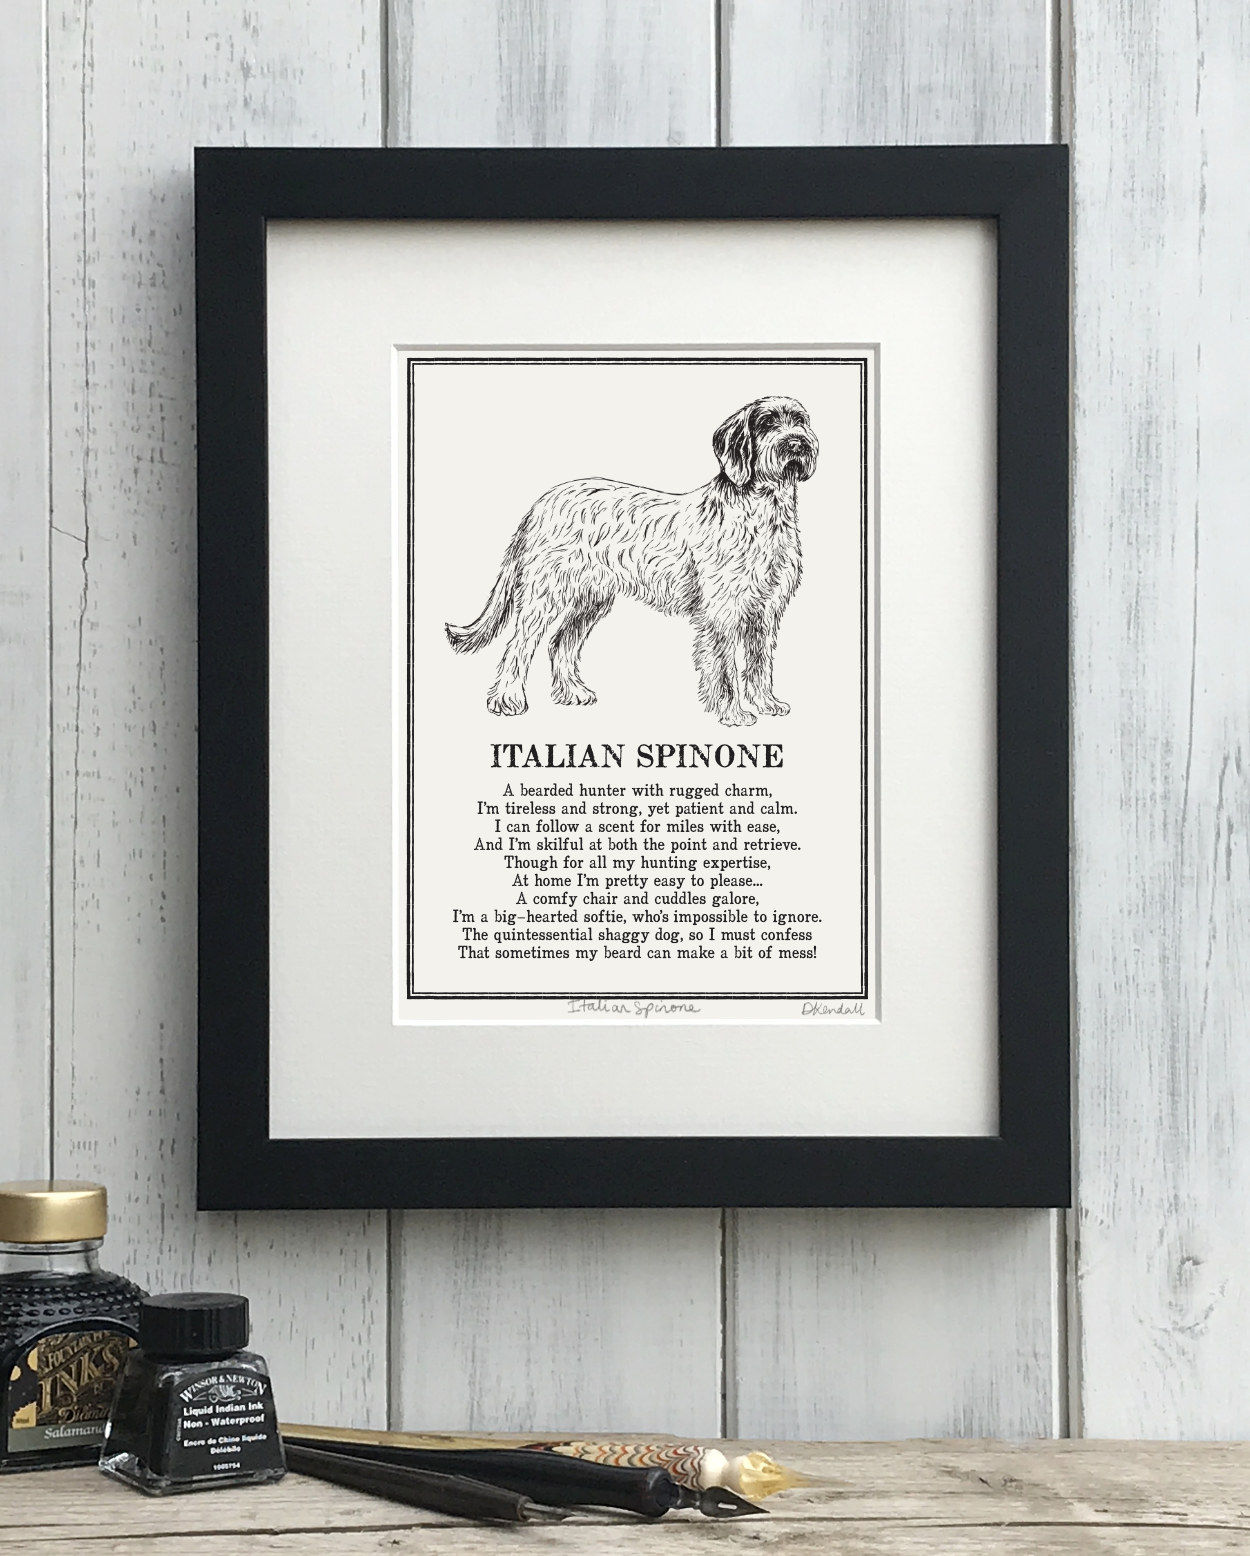 Italian Spinone Doggerel Illustrated Poem Art Print | The Enlightened Hound